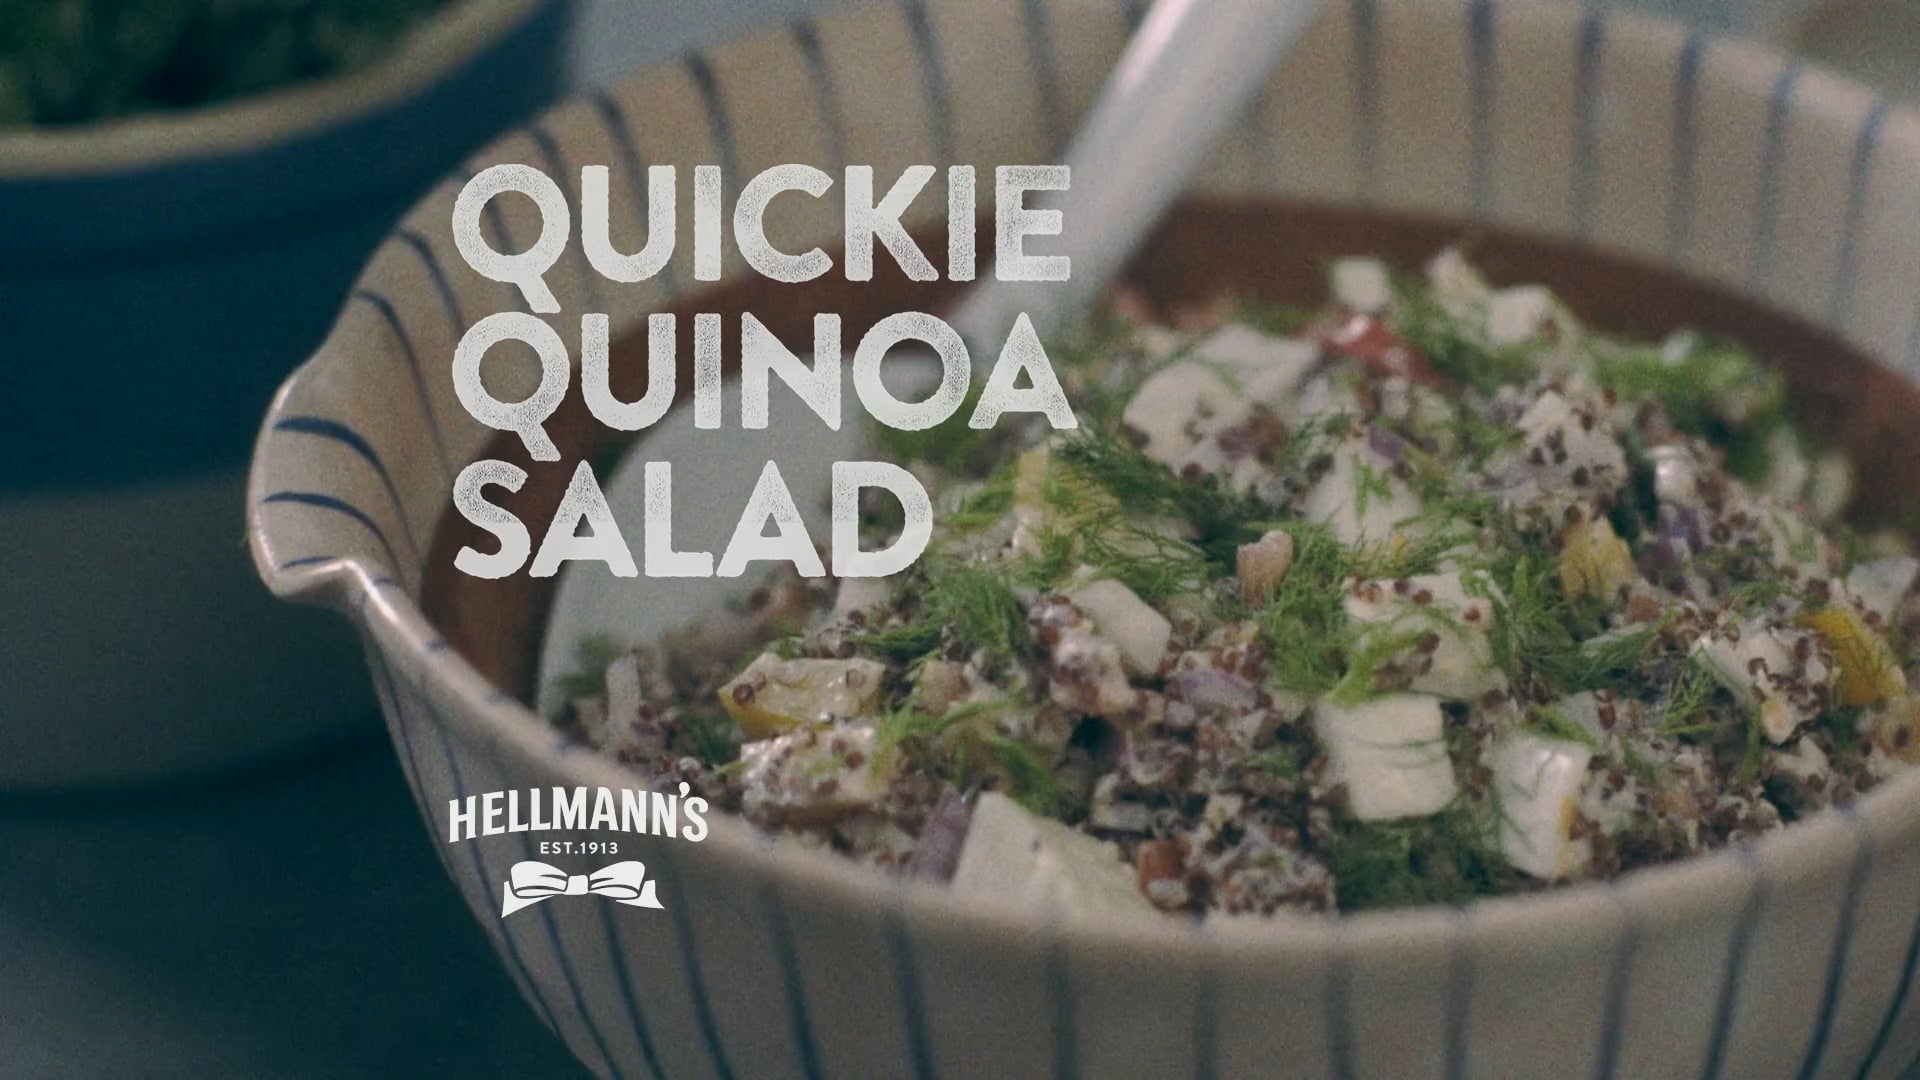 Digital Film Colourist | Hellmann’s - Recipe Films - Quickie Quinoa Salad - Created by Hogarth Worldwide for Ogilvy